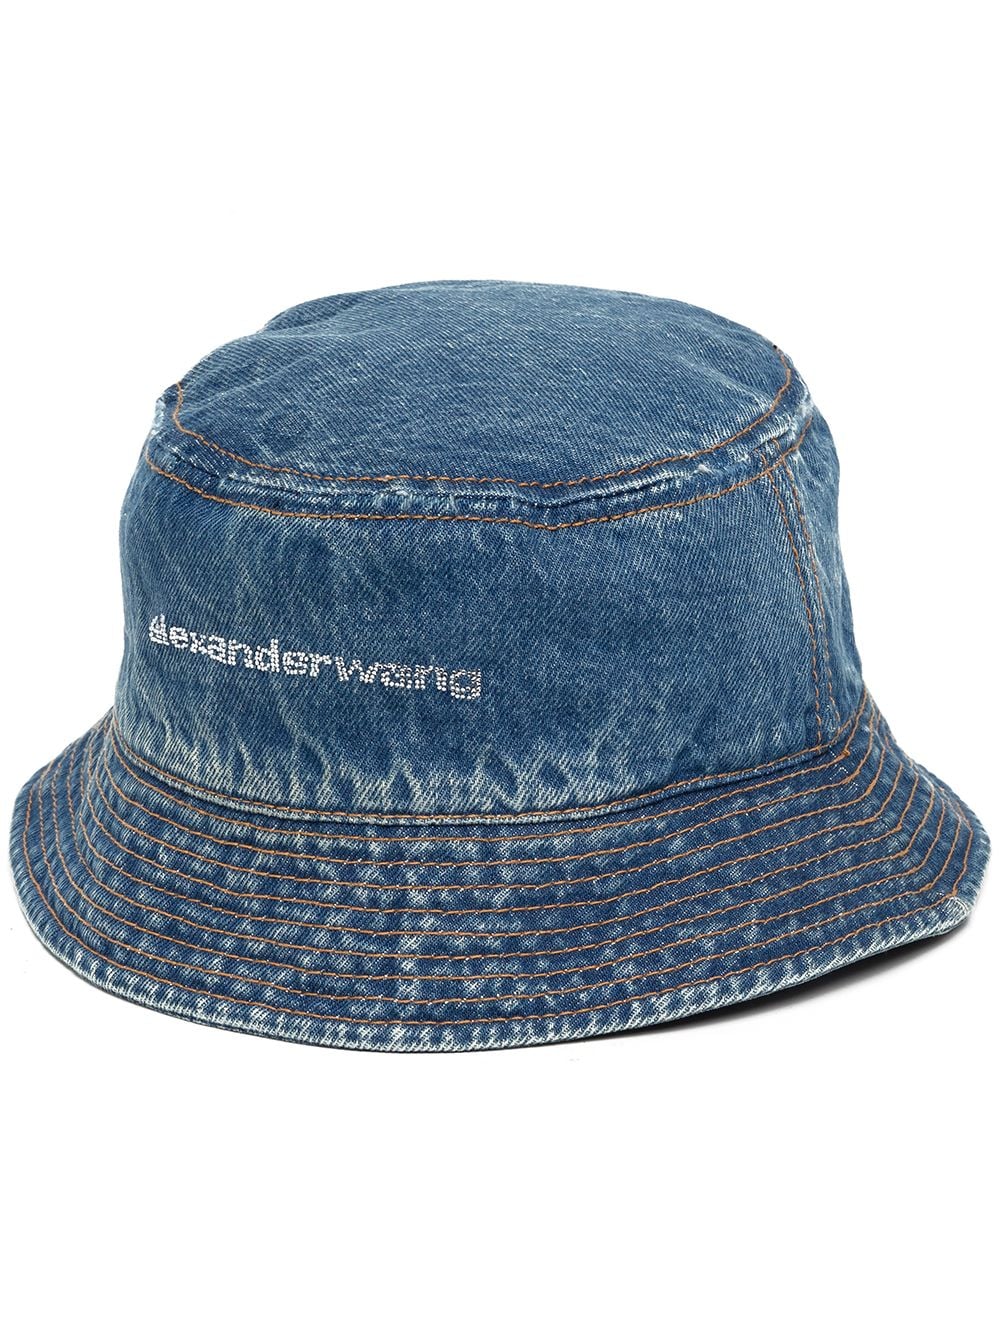 Image 1 of Alexander Wang logo-studded denim bucket hat